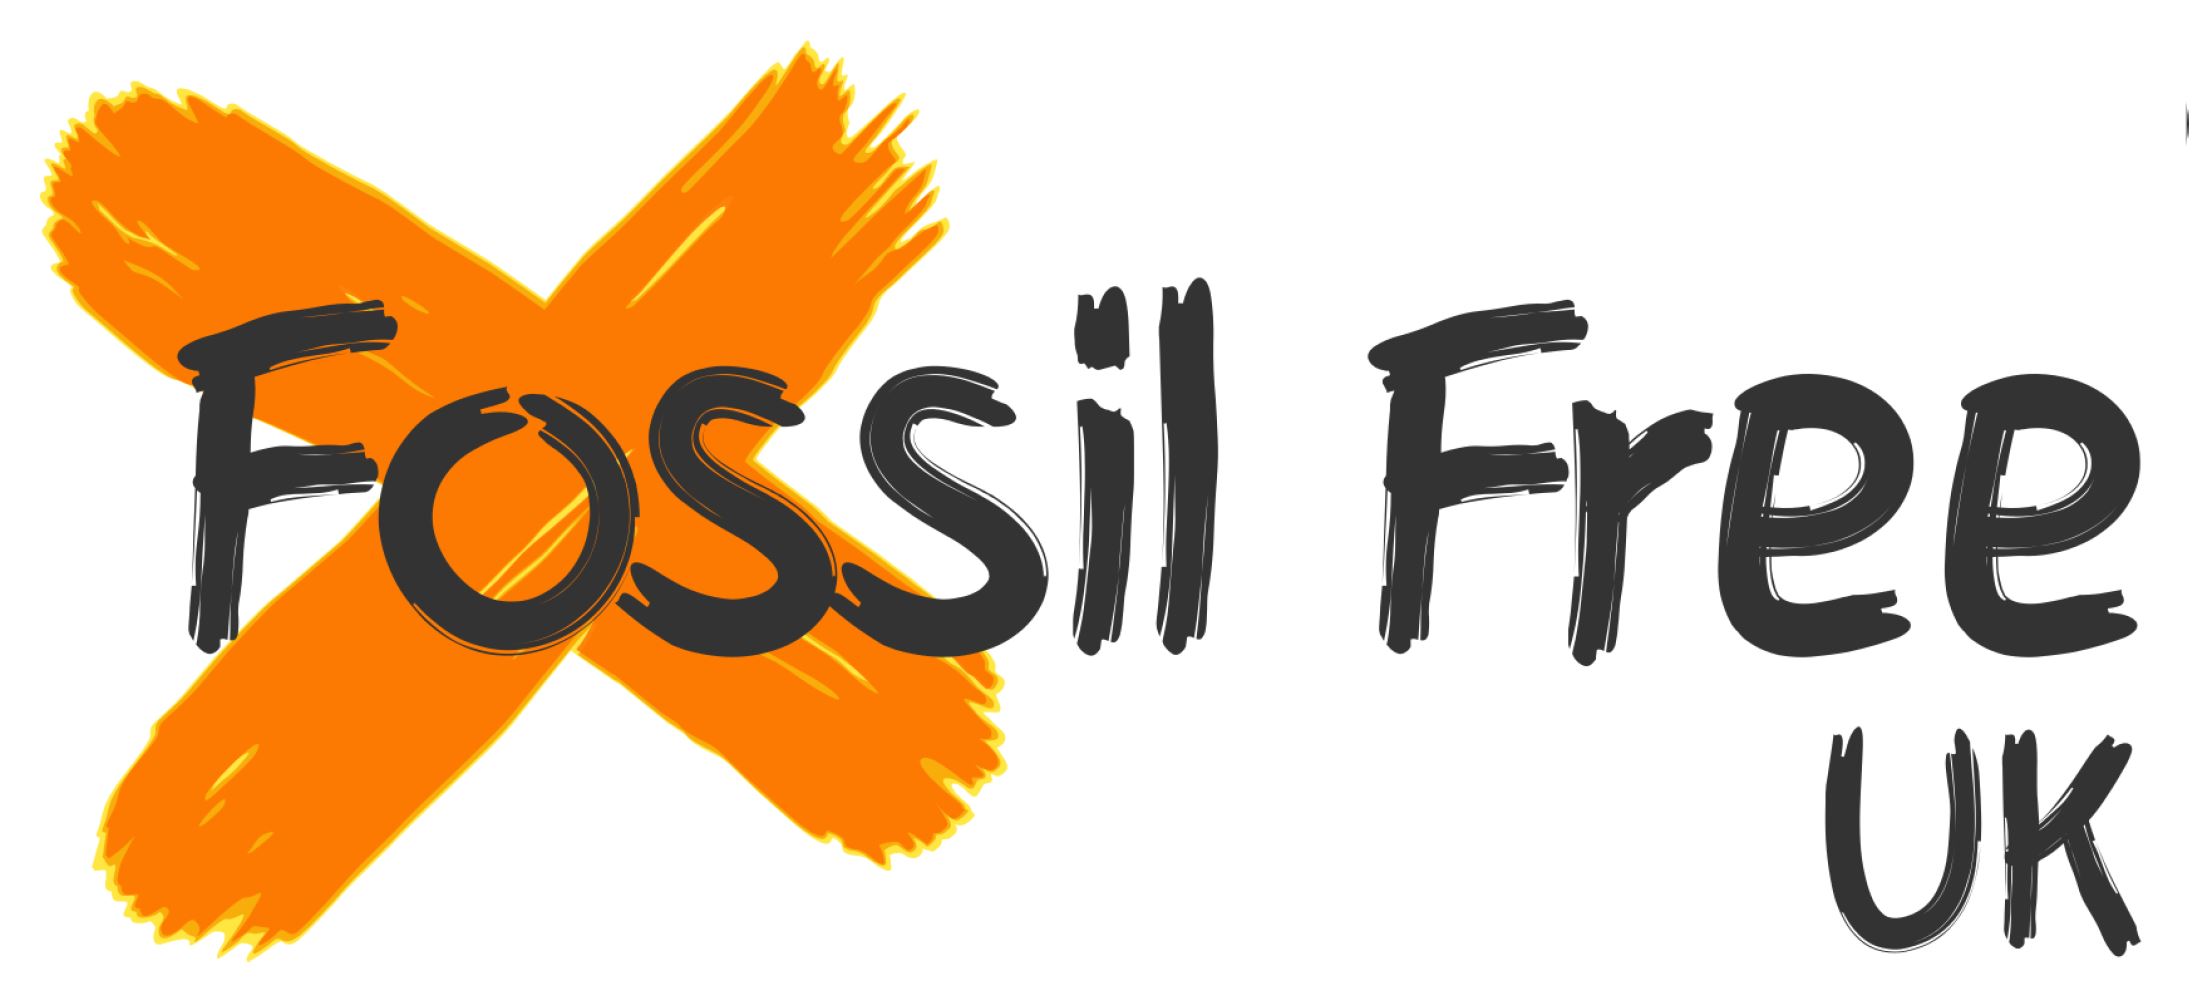 FossilFreeUK